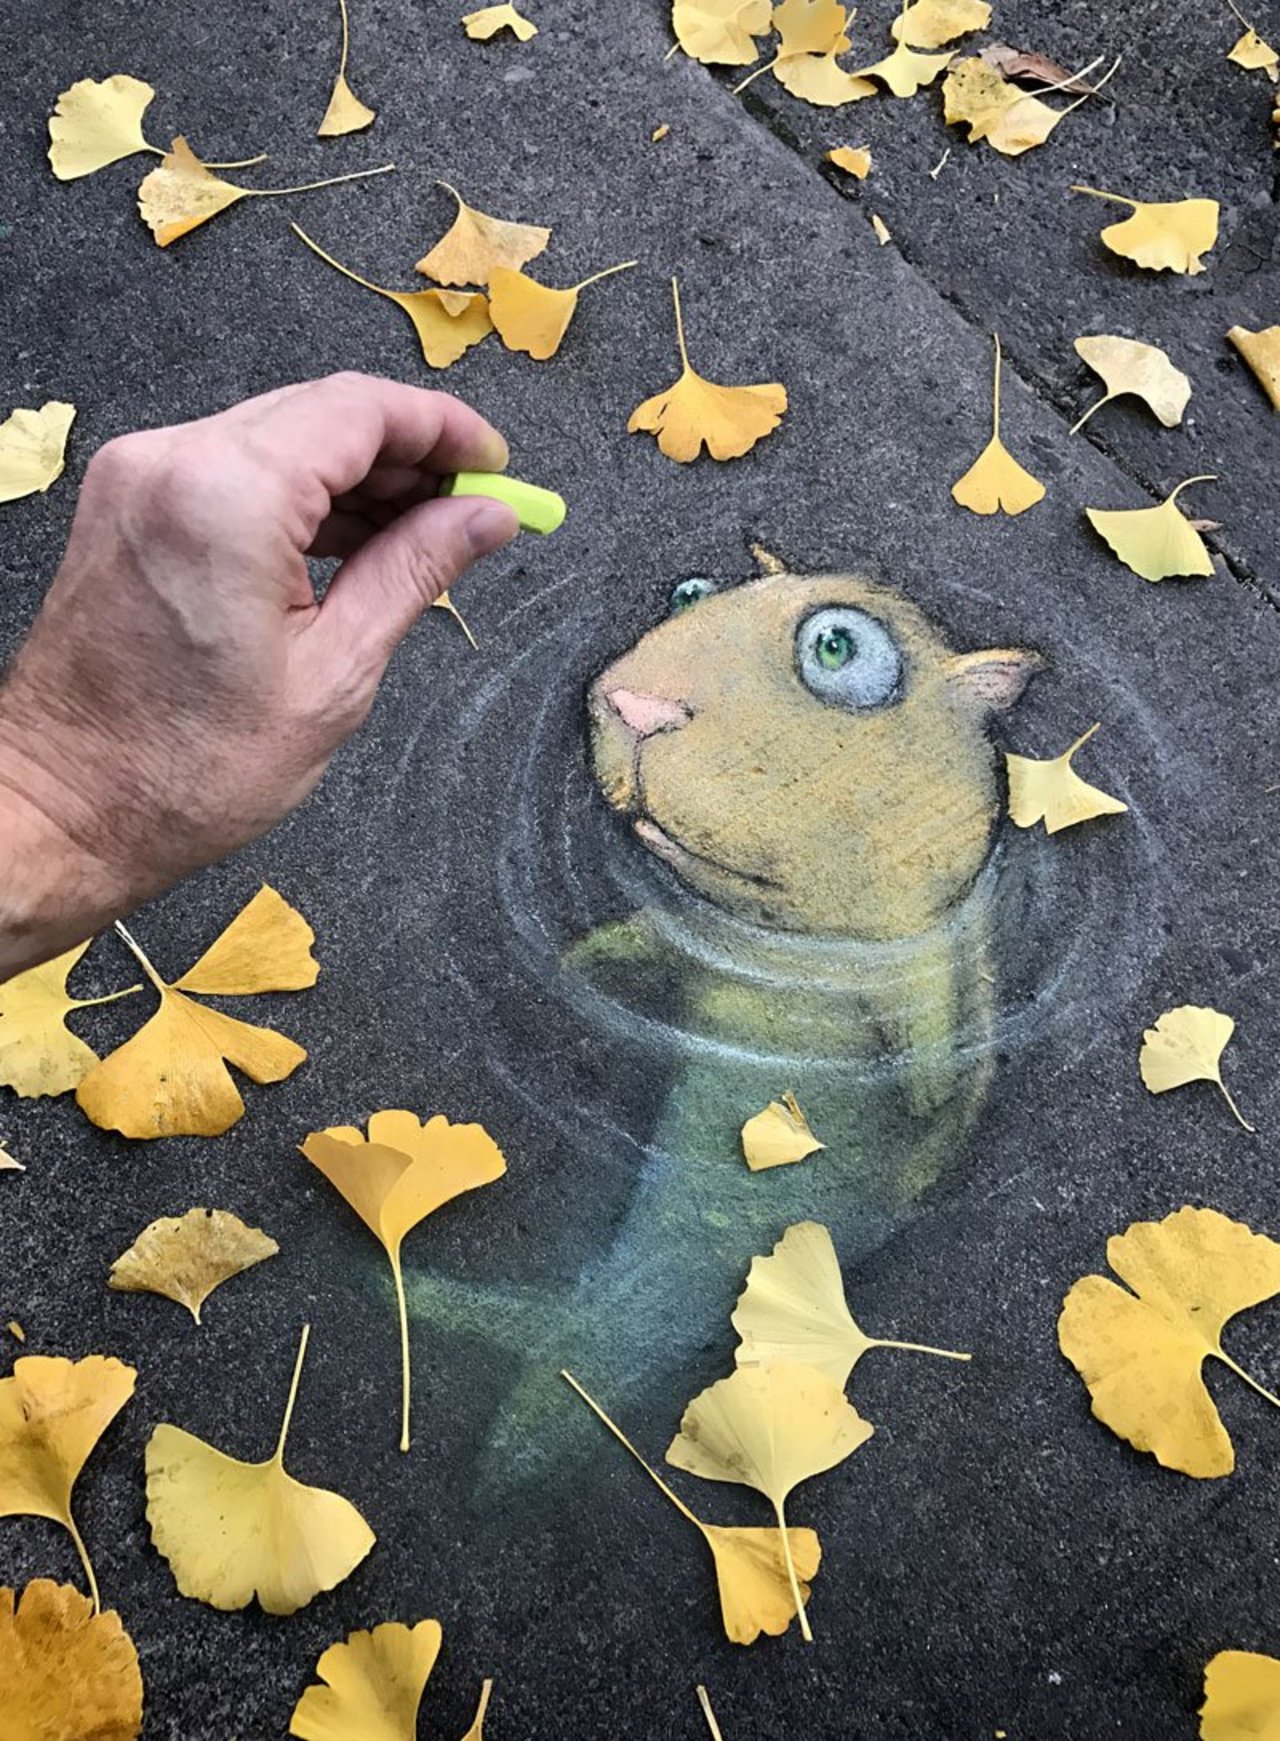 The Care and Feeding of Chalk Creatures, Vol. 7: Urban Catfish #streetart #sidewalkchalk #3Dart #fishing https://t.co/x54GyXTcID